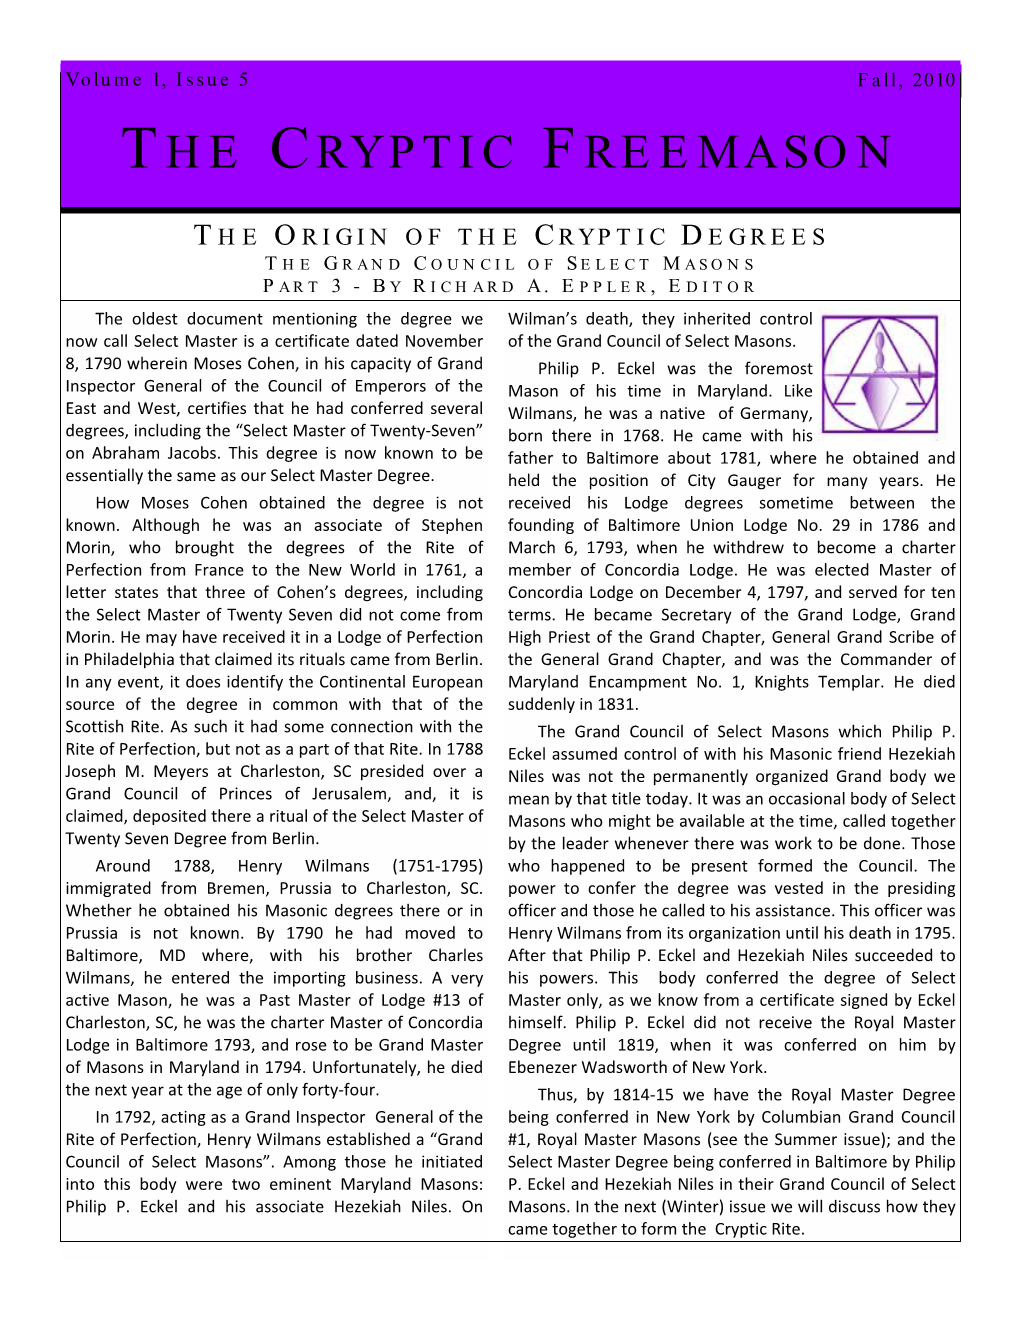 The Cryptic Freemason Page 3